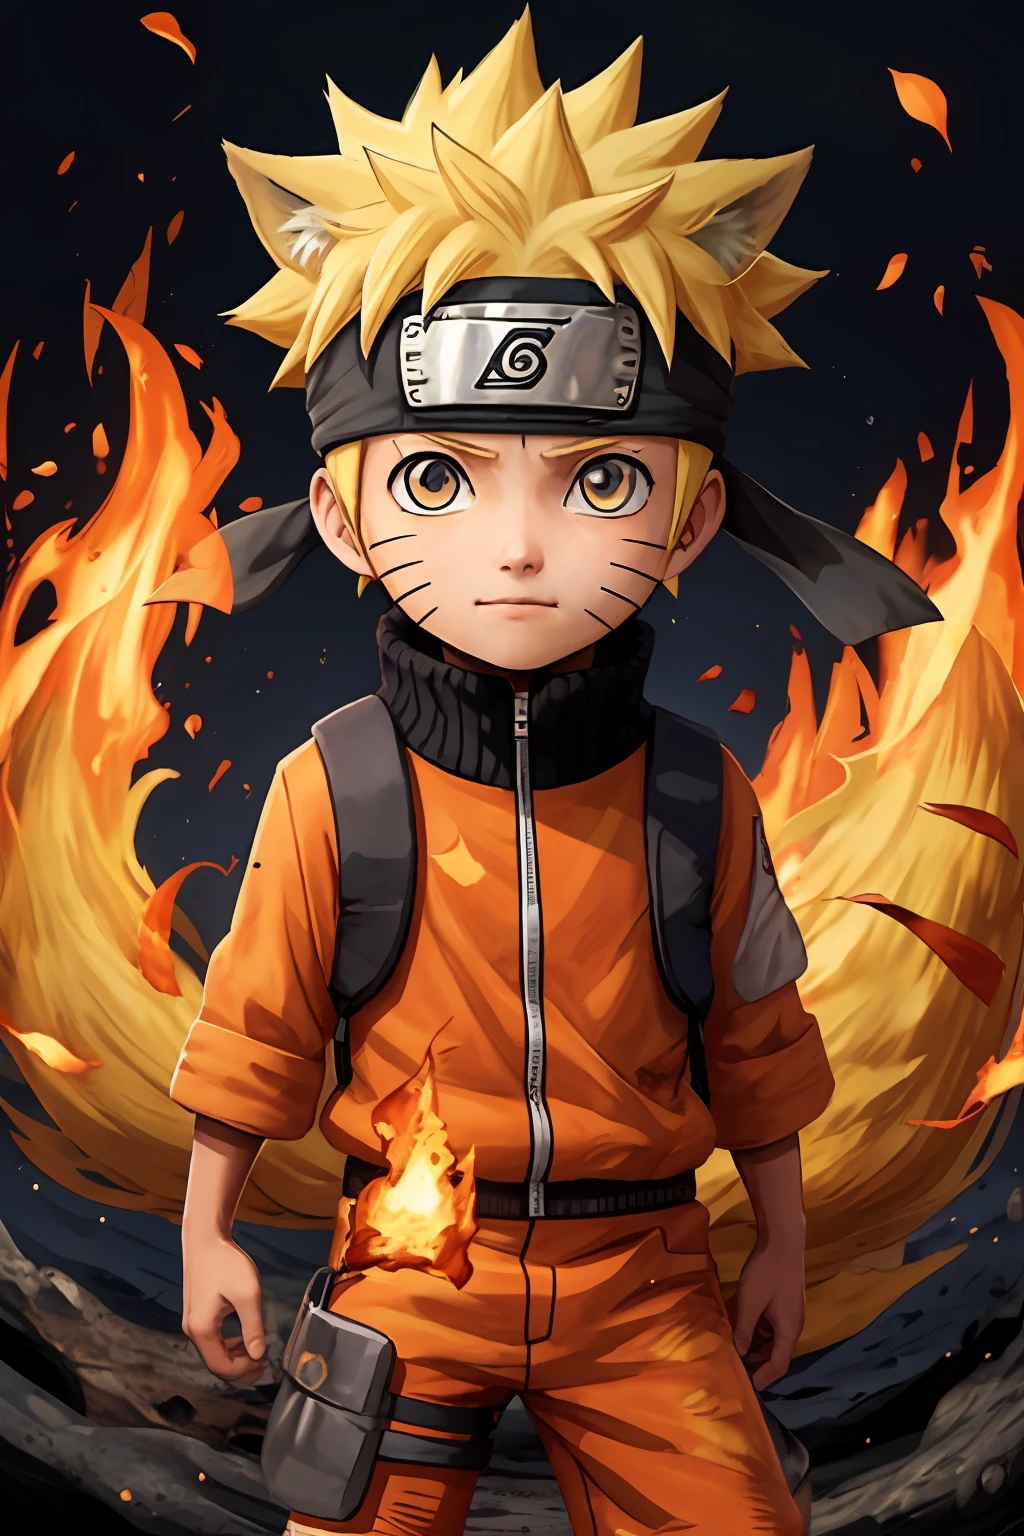 Naruto,1 chico, negro_fondo, fuego, 9 colas de zorro,